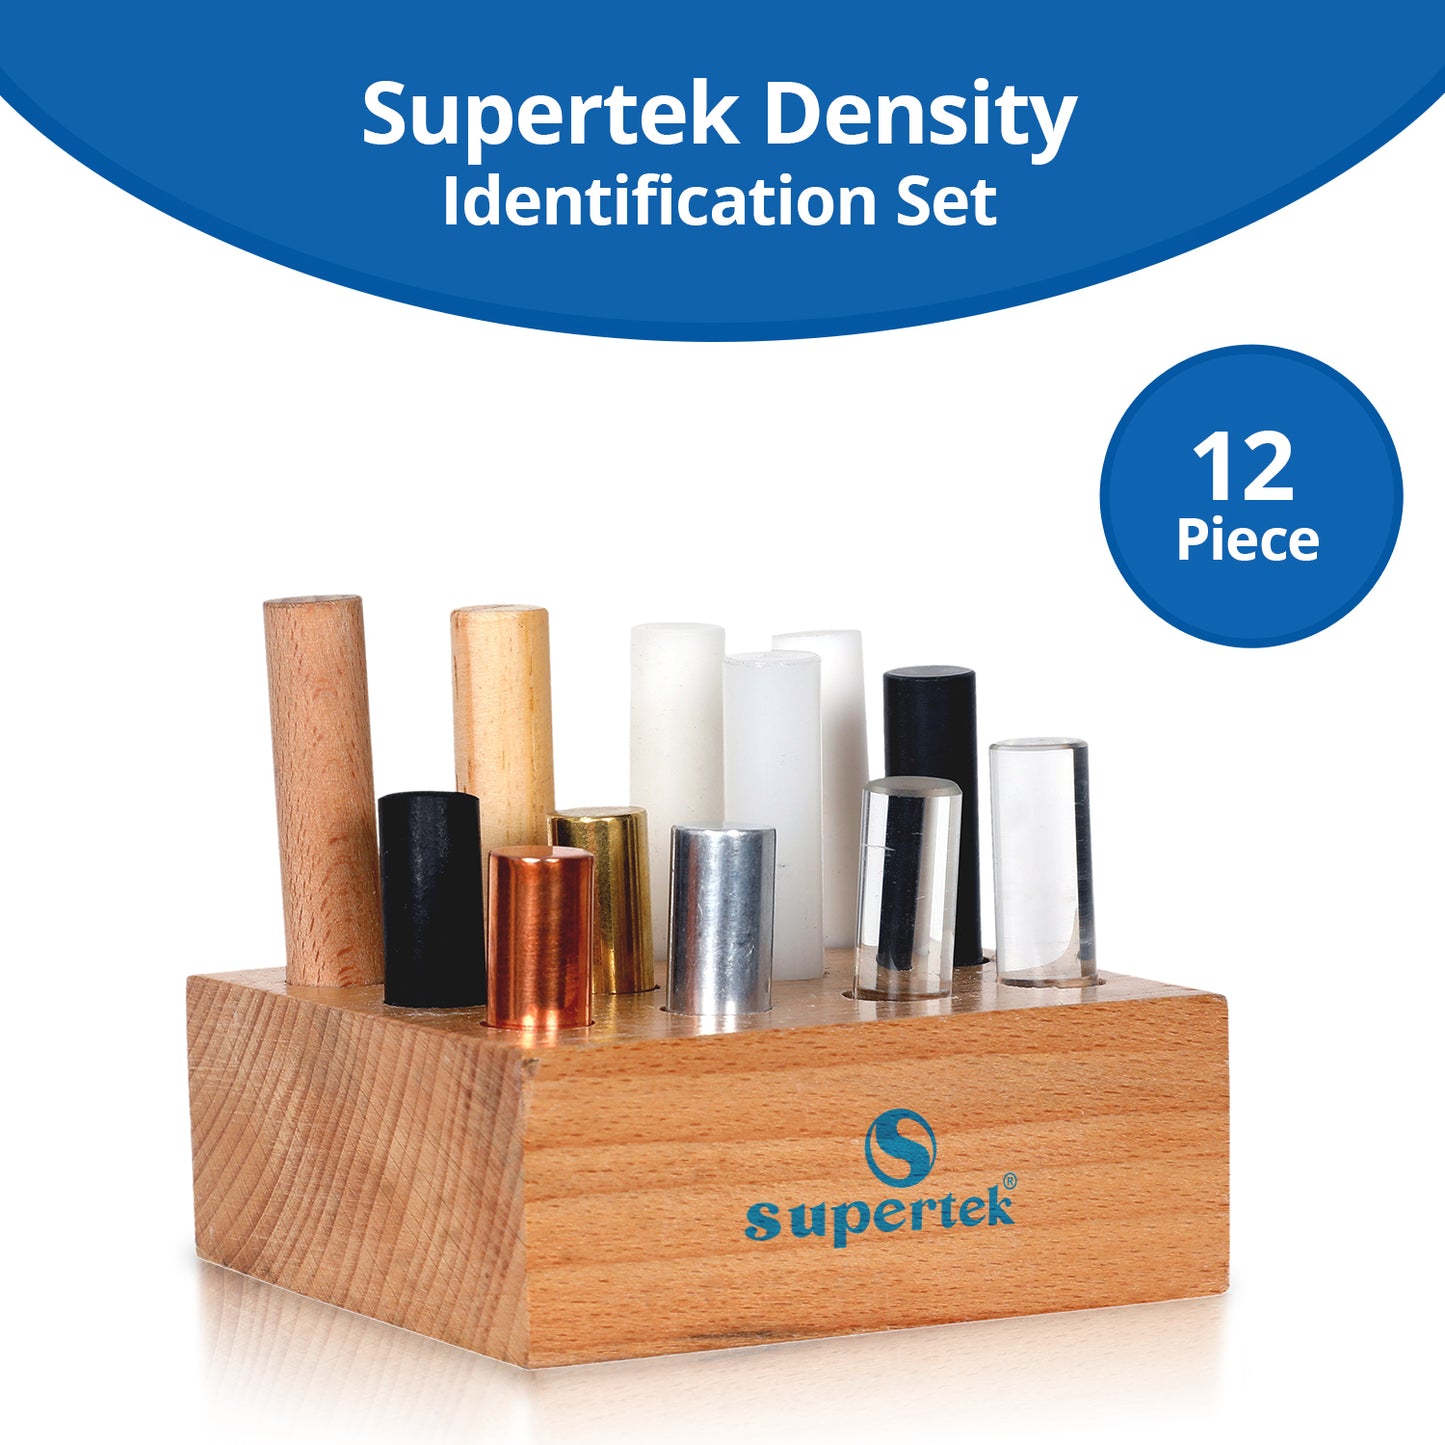 Supertek Density Identification Set, 12 Piece